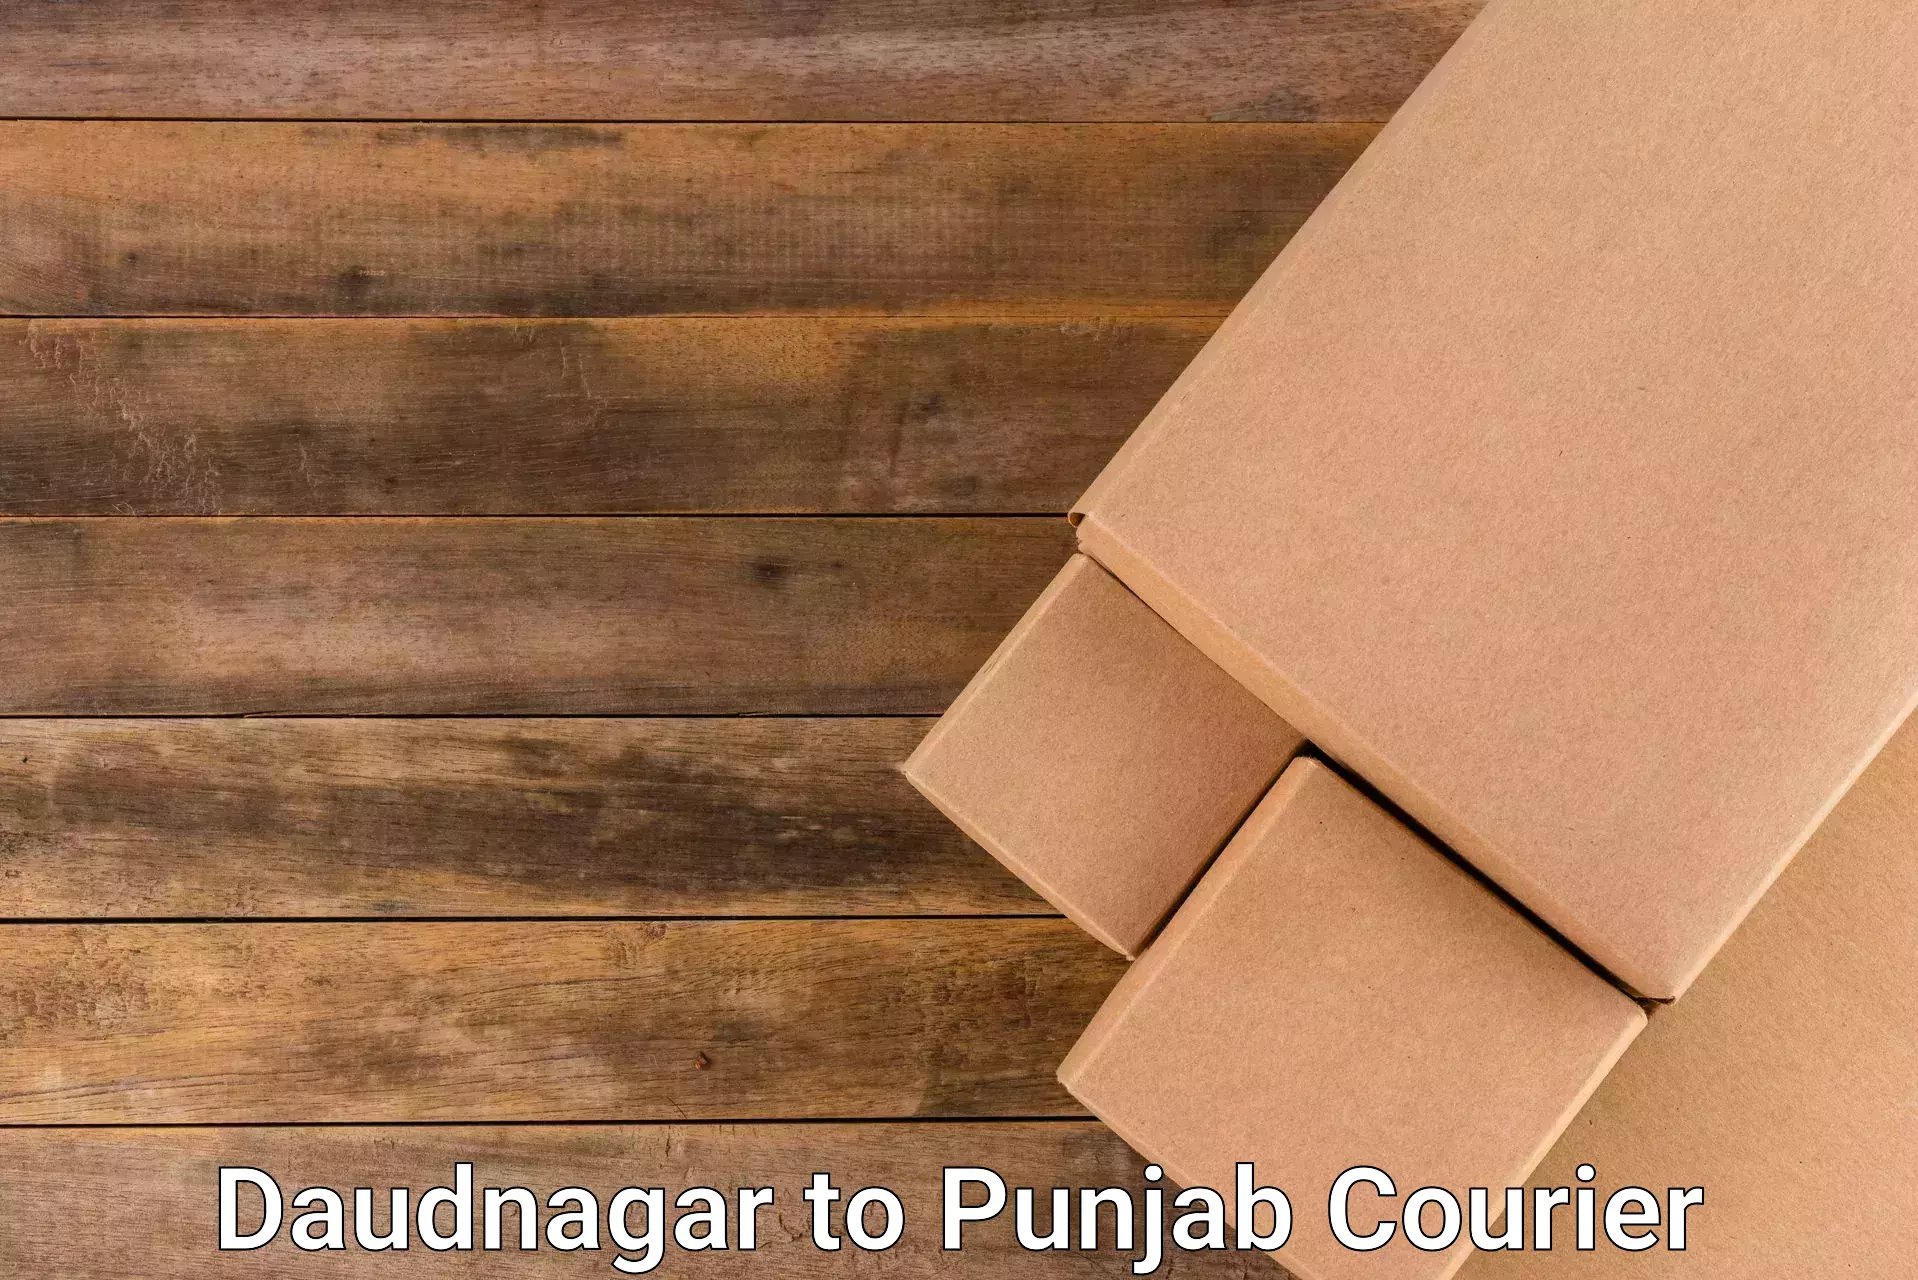 Digital courier platforms Daudnagar to Mohali